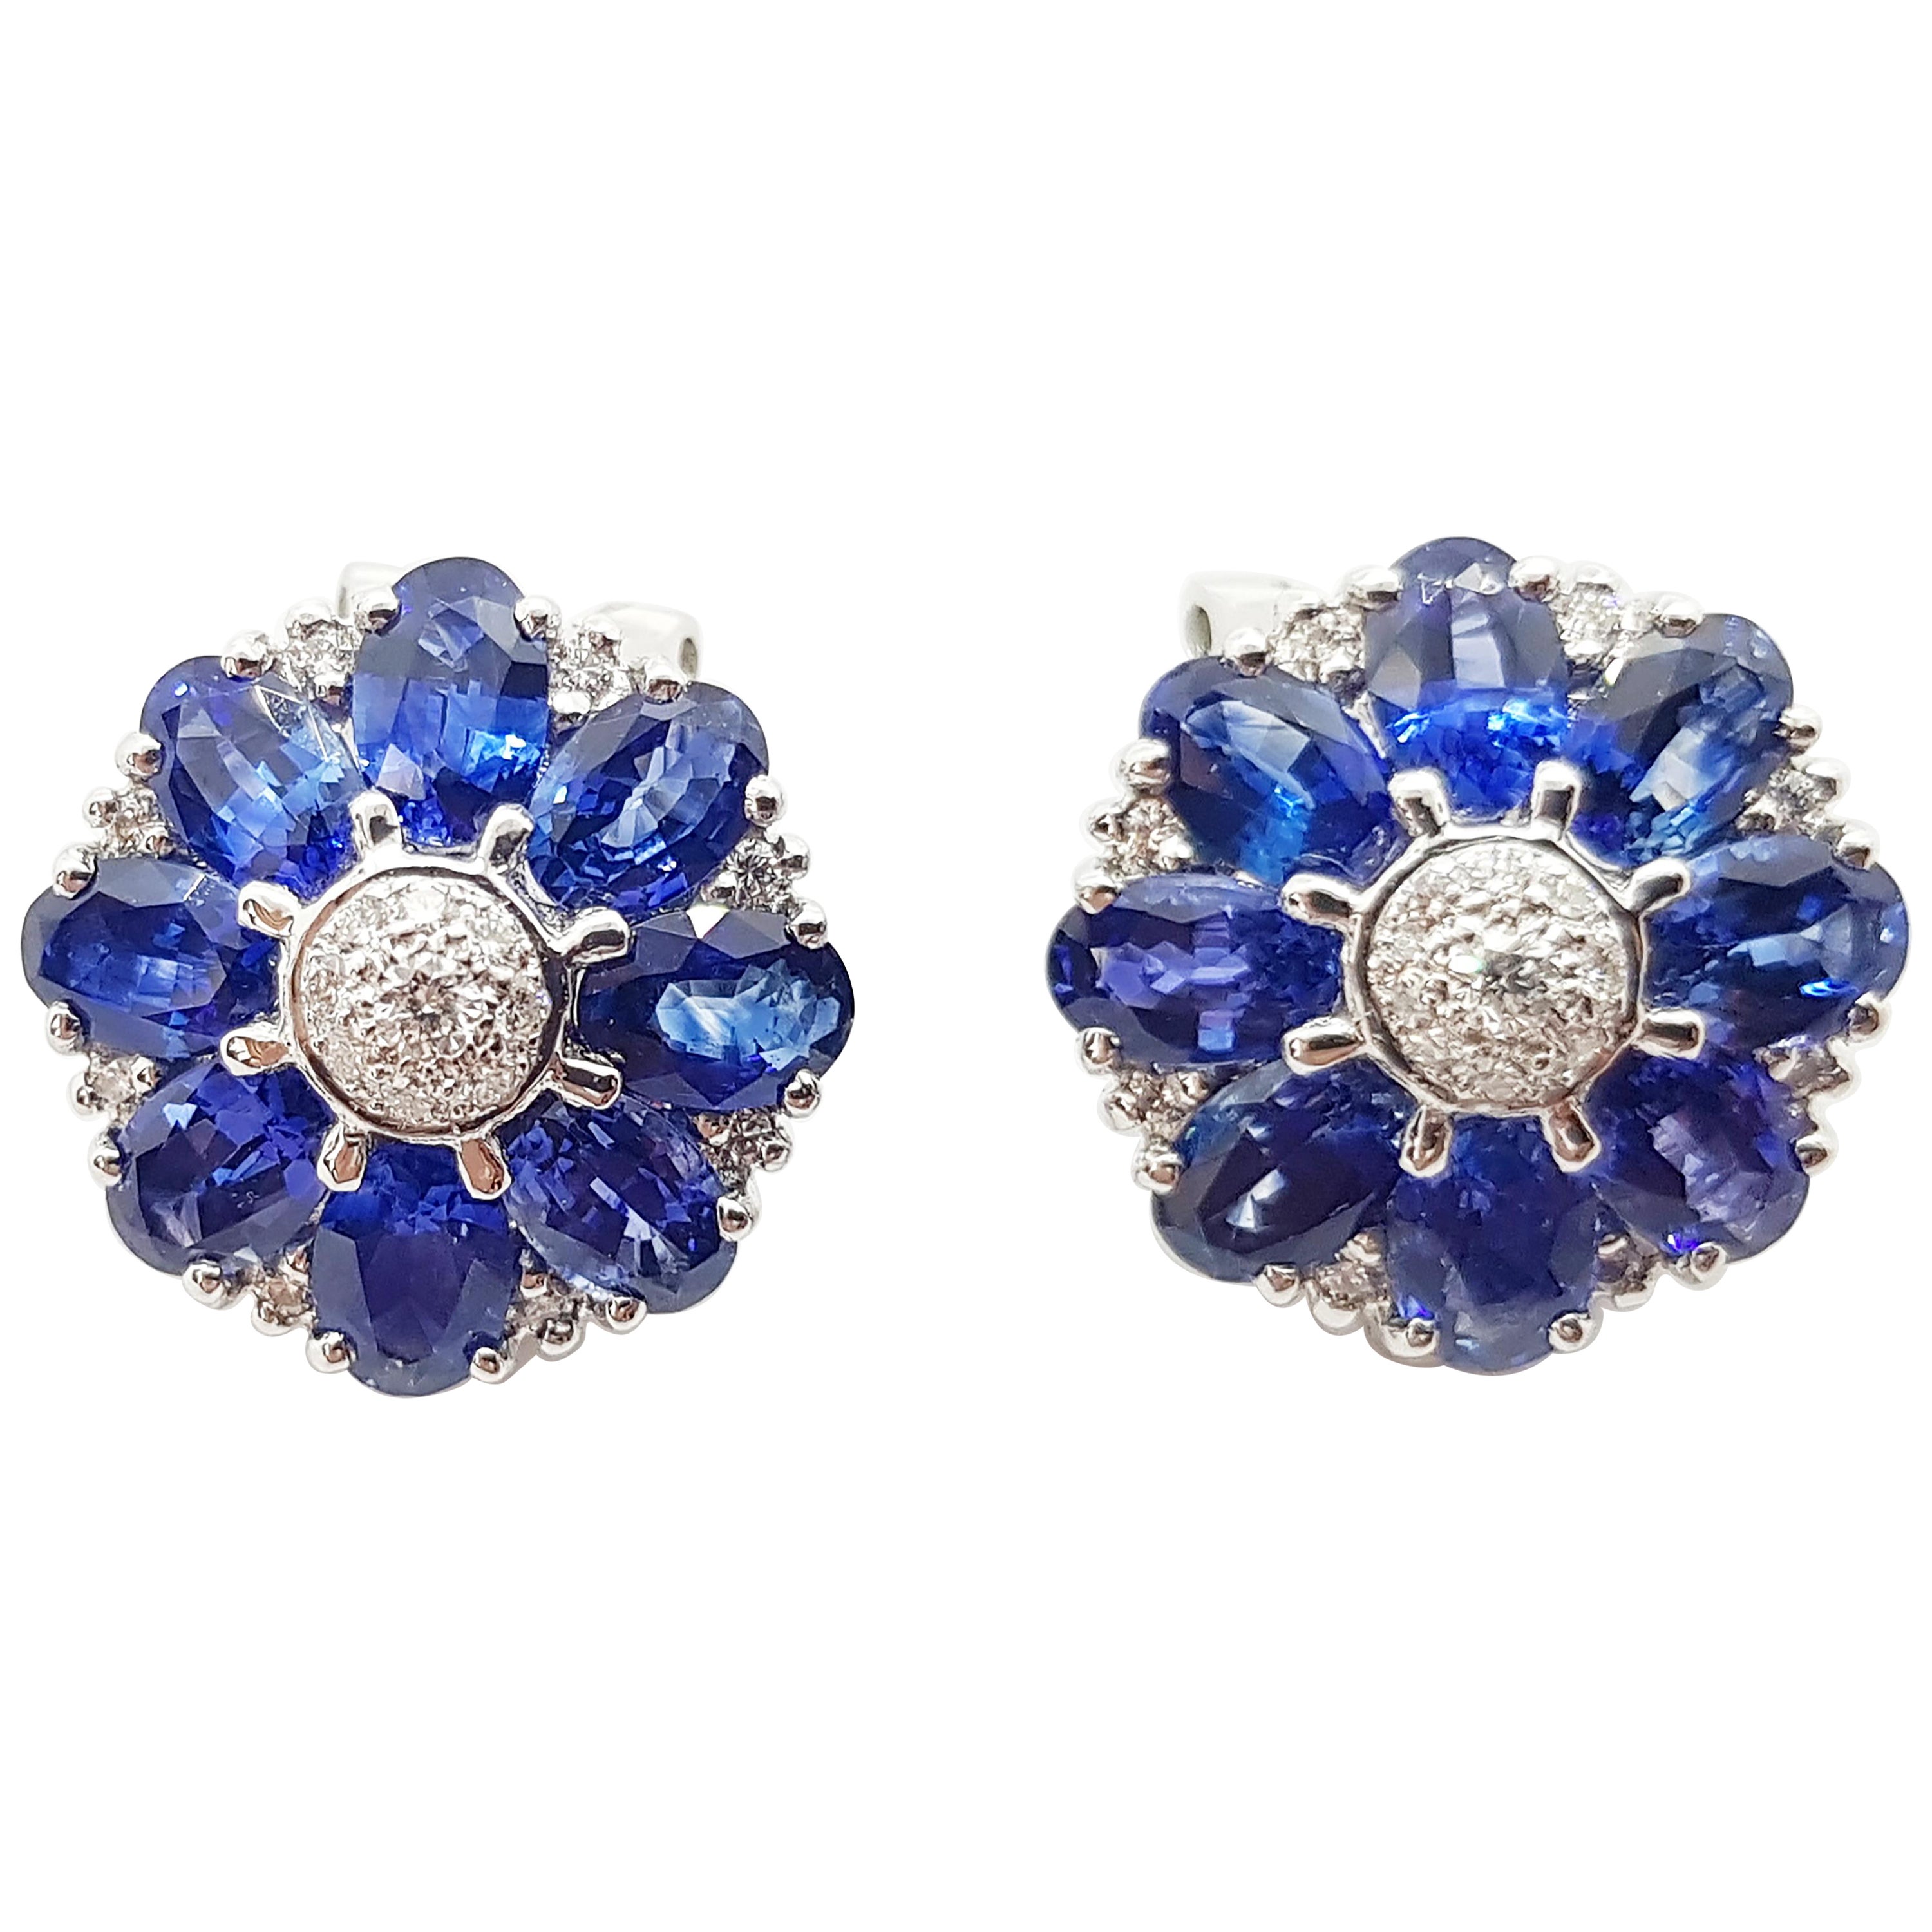 Blue Sapphire with Diamond Flower Earrings Set in 18 Karat White Gold Settings